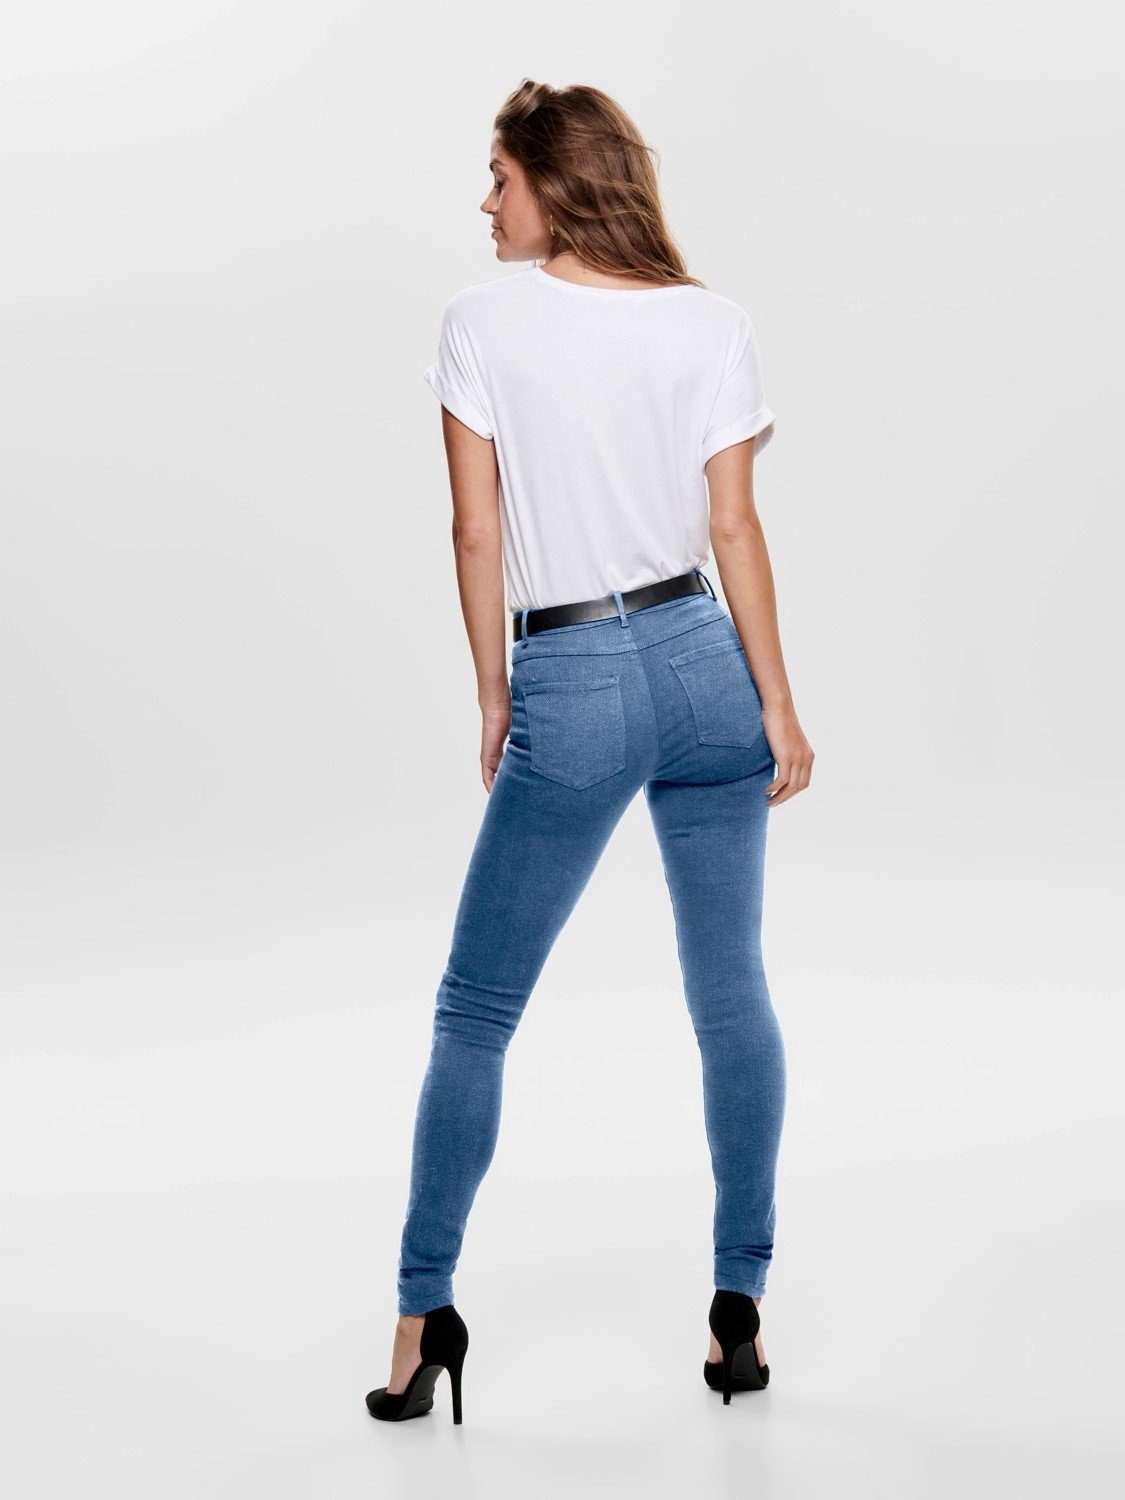 ONLY Regular-Waist Only Blau Jeans-Hose Stretch Damen Skinny-fit-Jeans OnlRain Denim Skinny-Fit